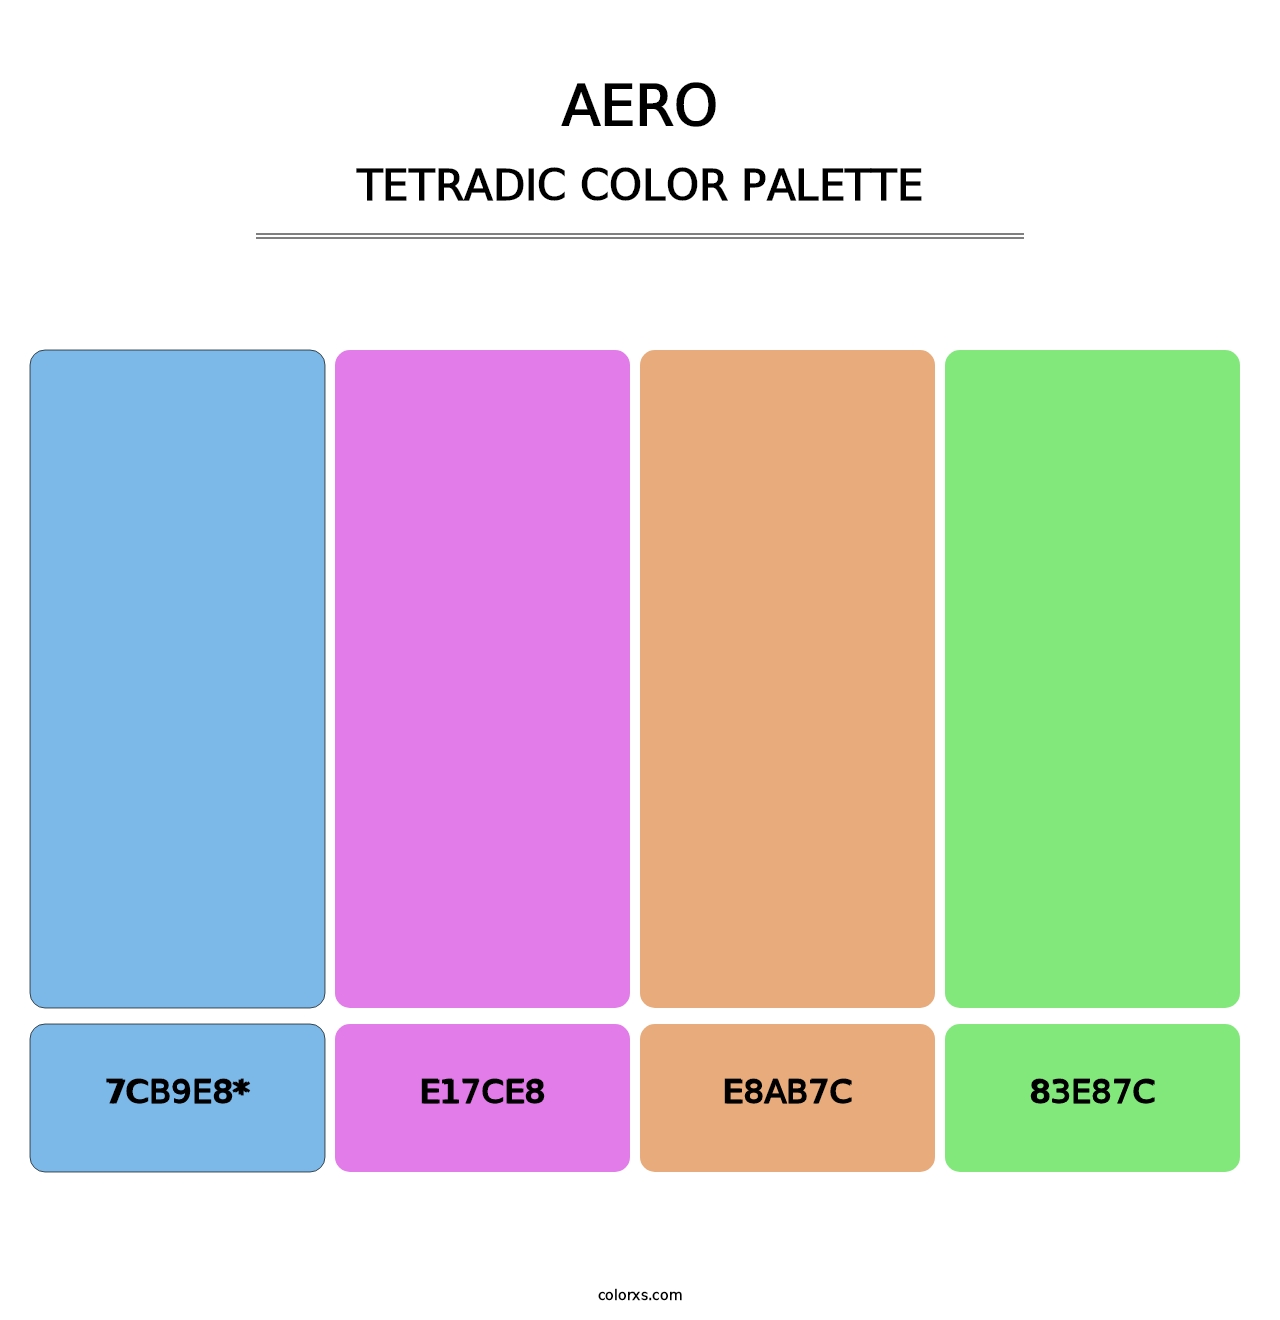 Aero - Tetradic Color Palette